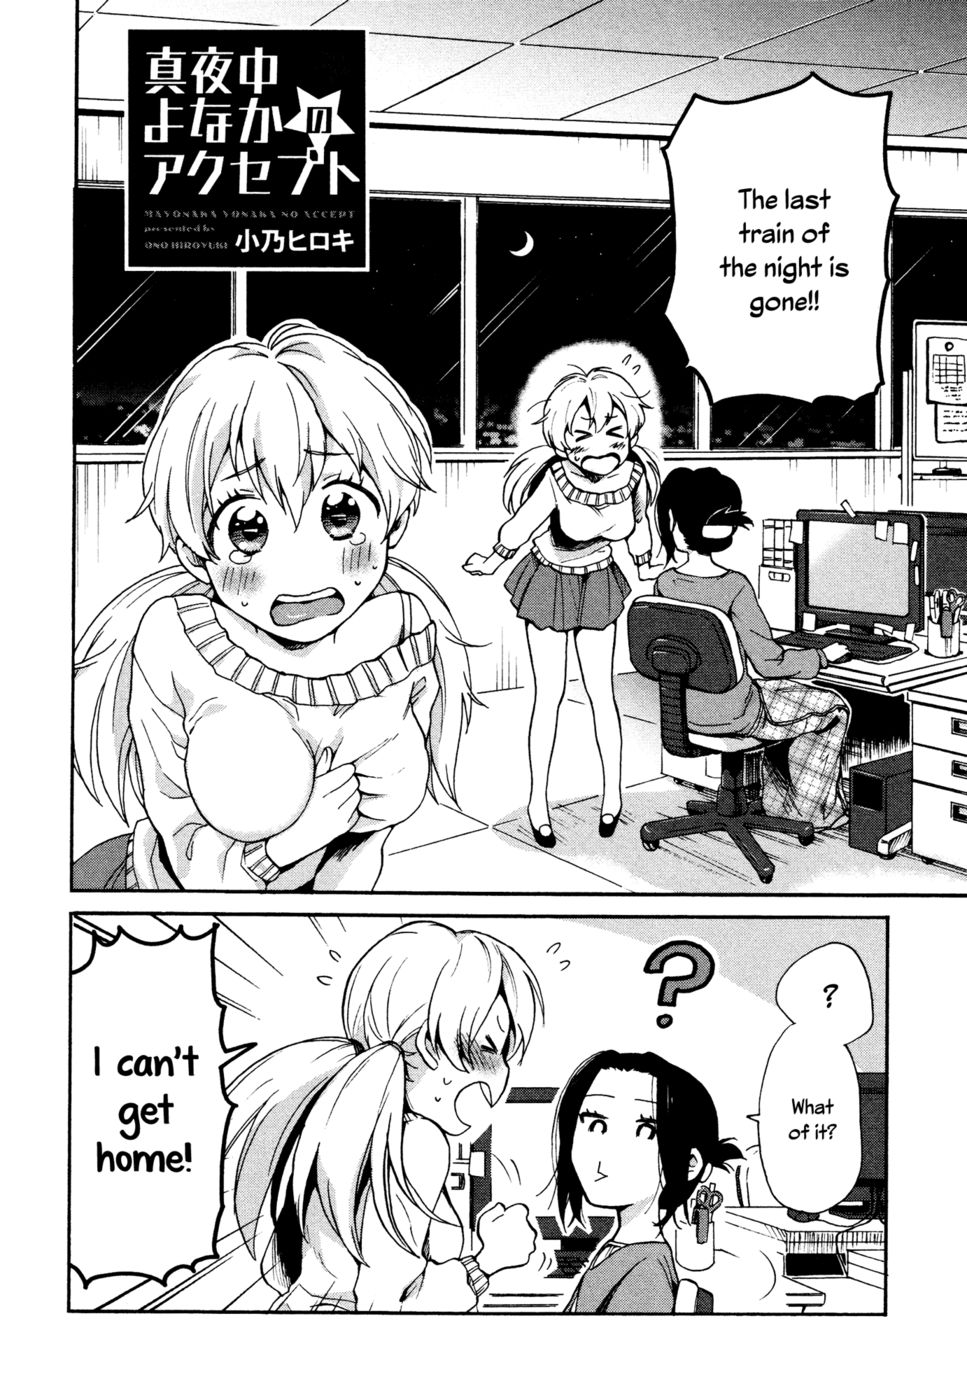 Hentai Manga Comic-Mayonaka Yonaka no Accept-Chapter 1-2